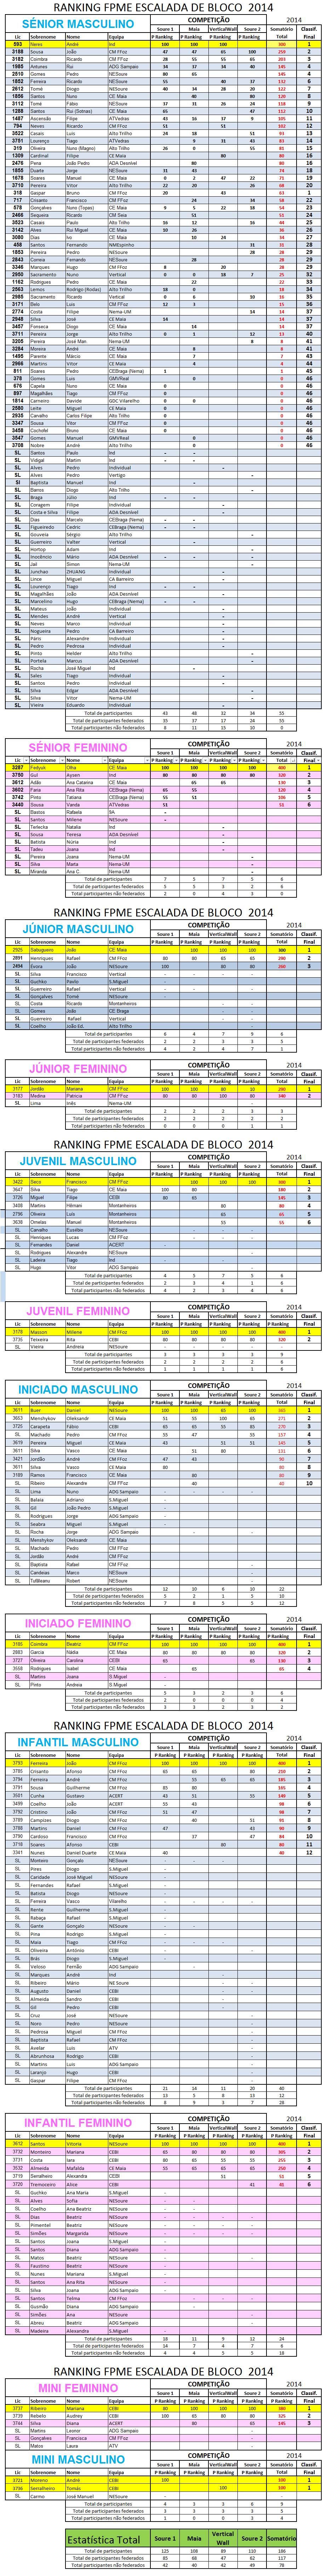 RankingFPMEBloco-2014